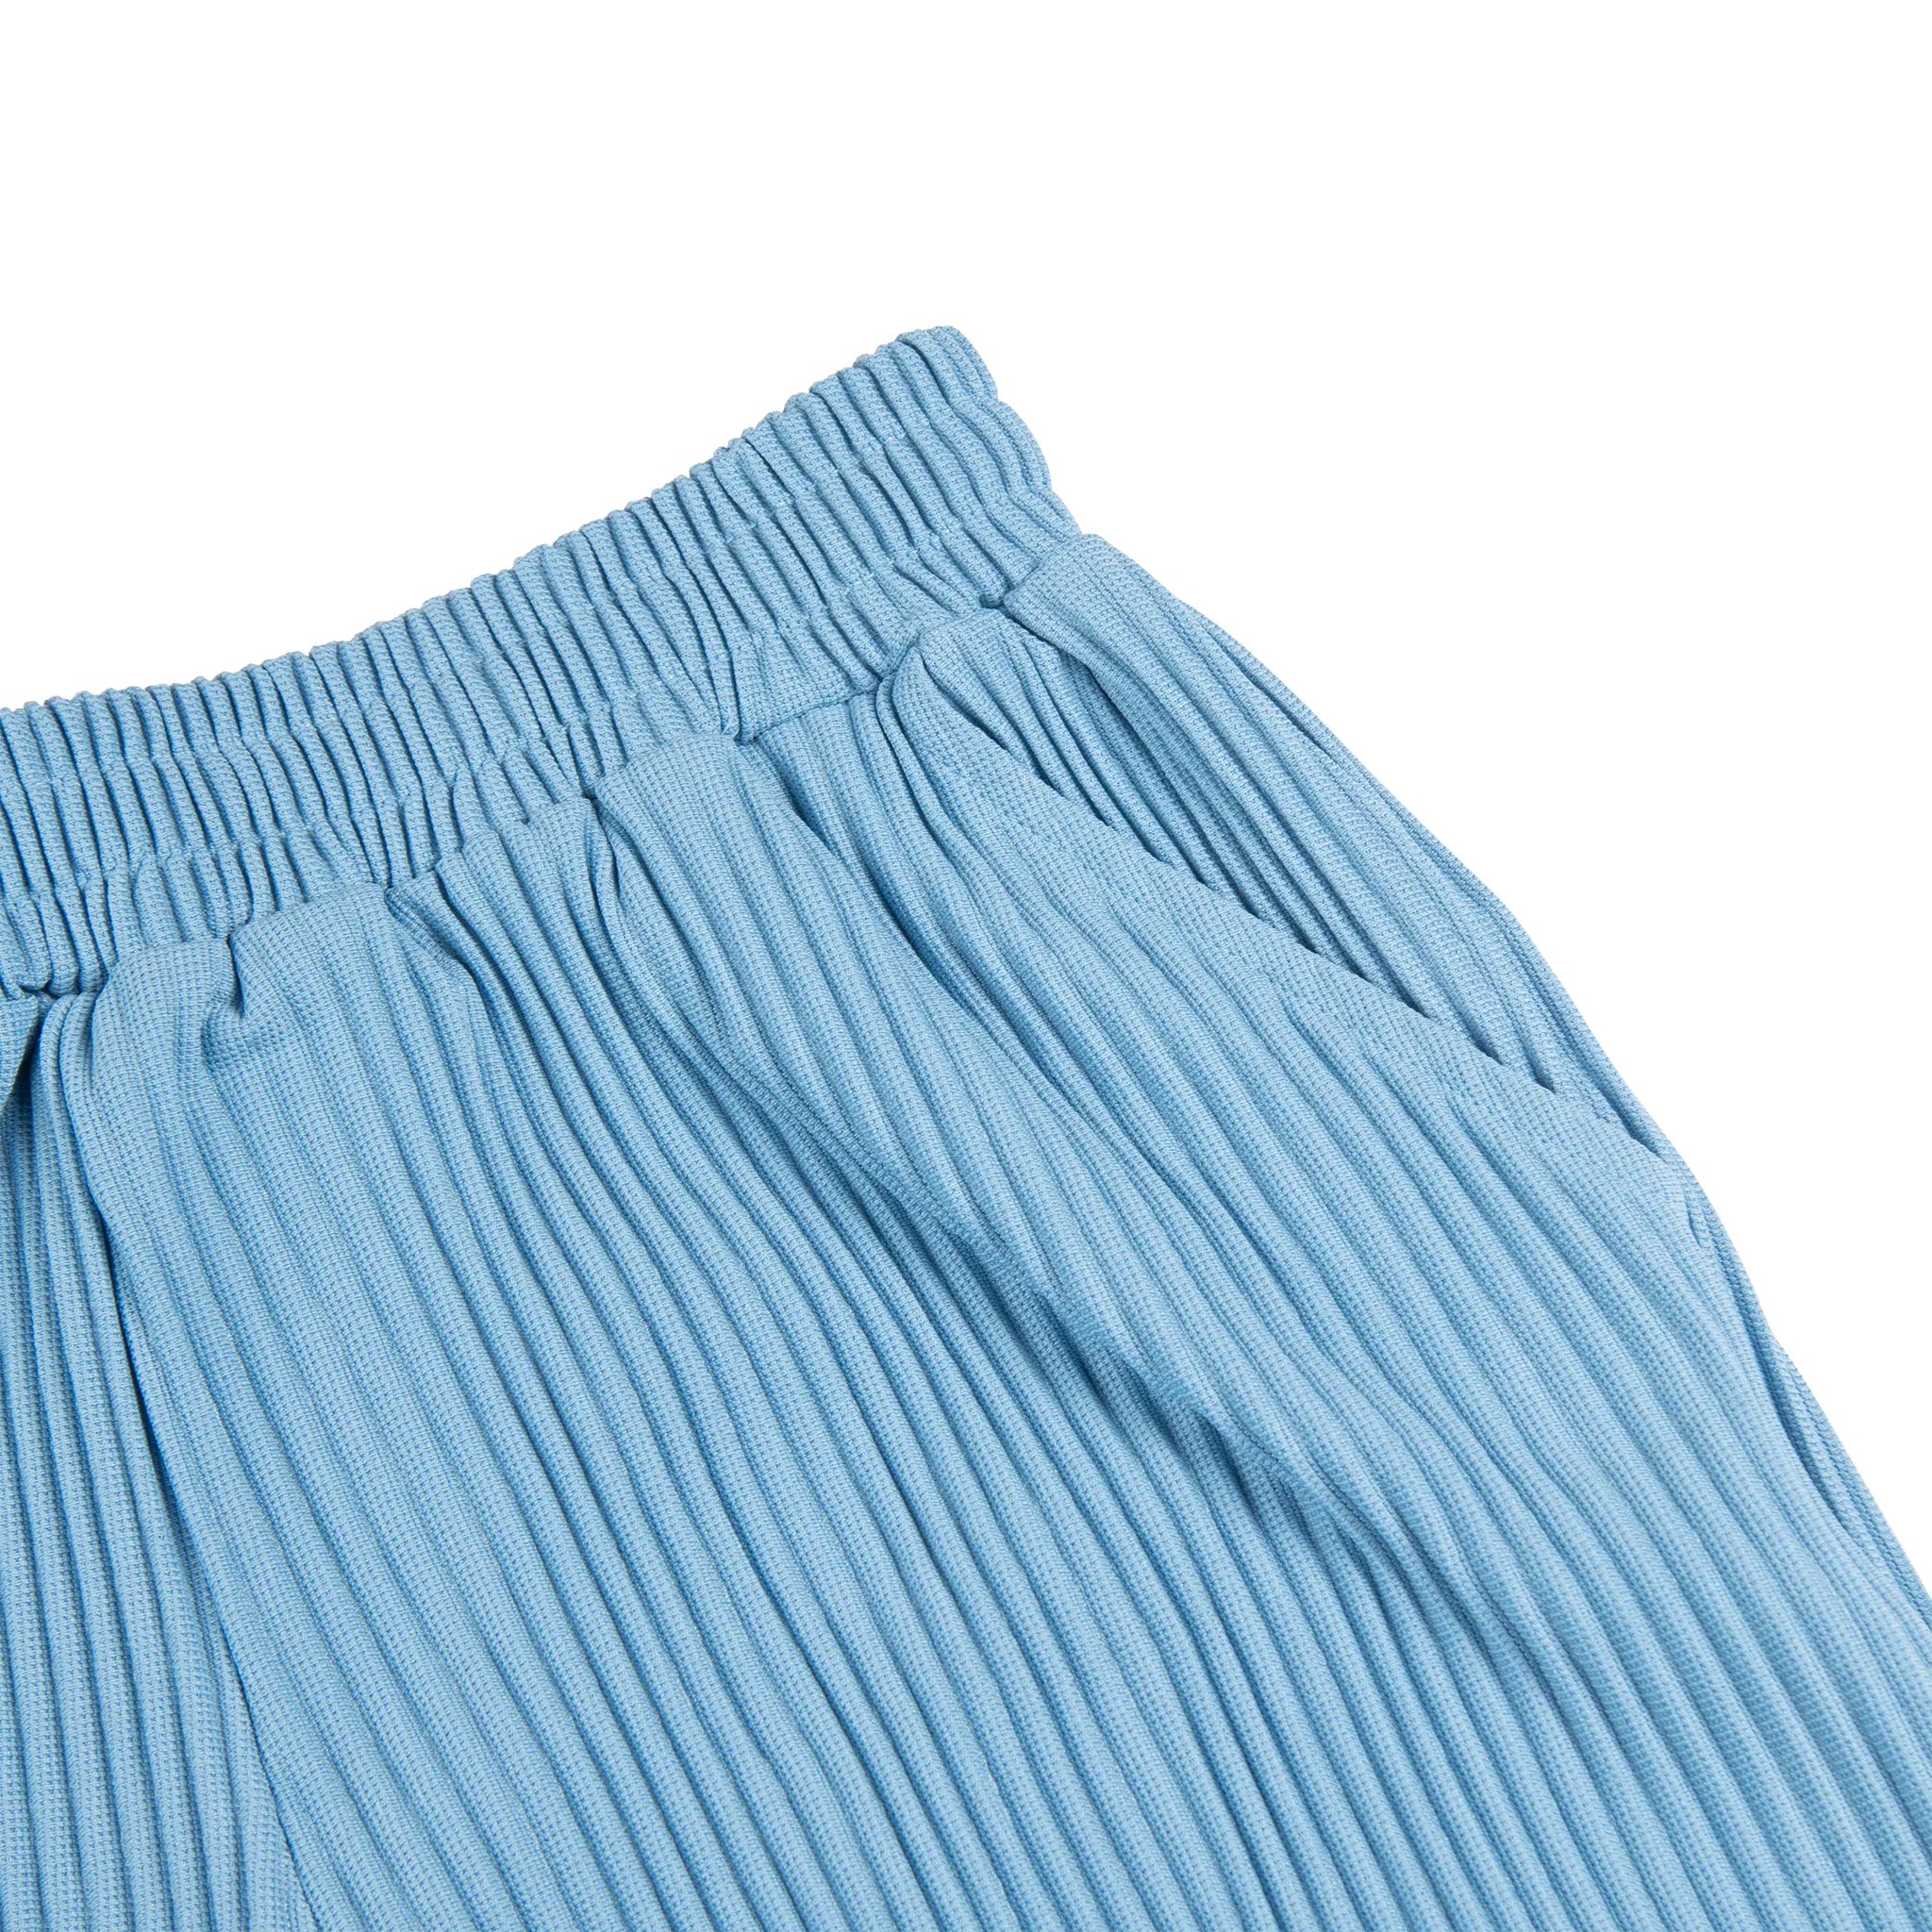 Detail view of Belier Pleated Light Blue Shorts BM-075